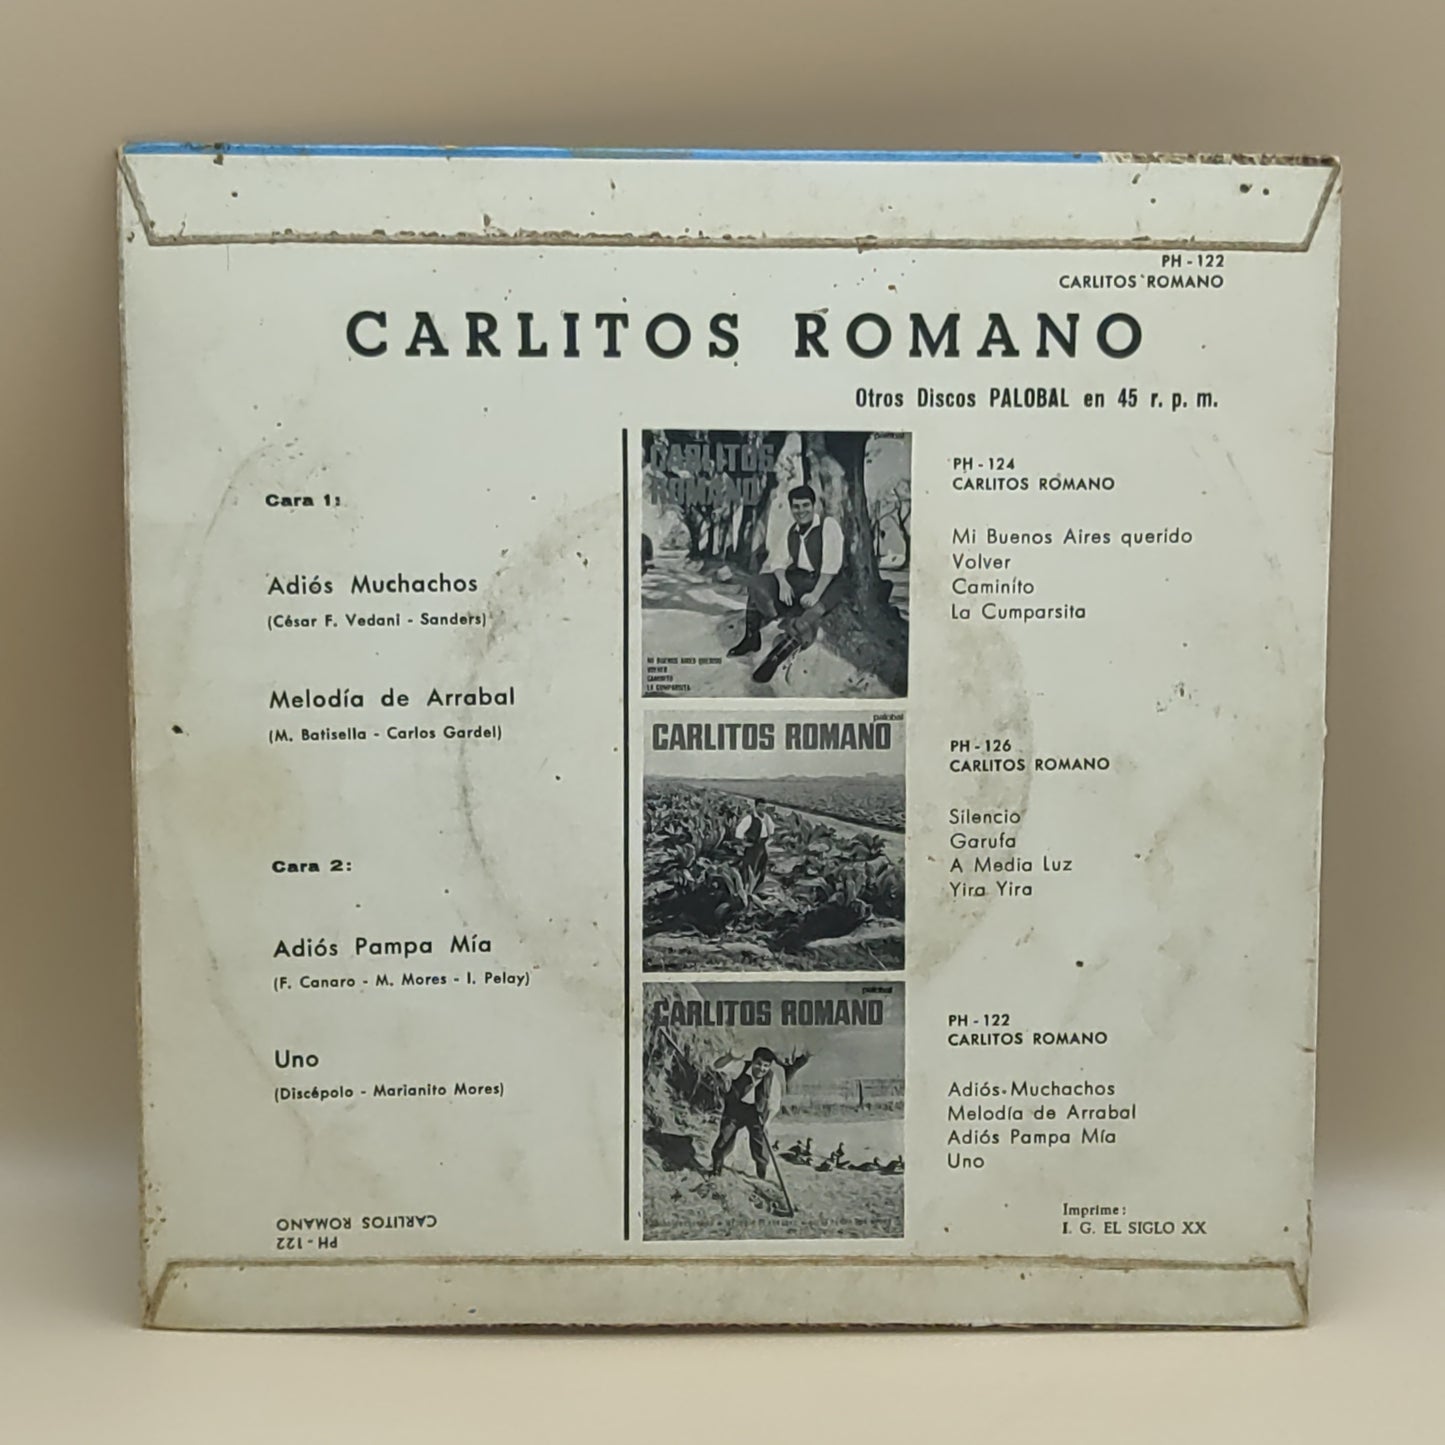 Carlitos Romano – Carlitos Romano